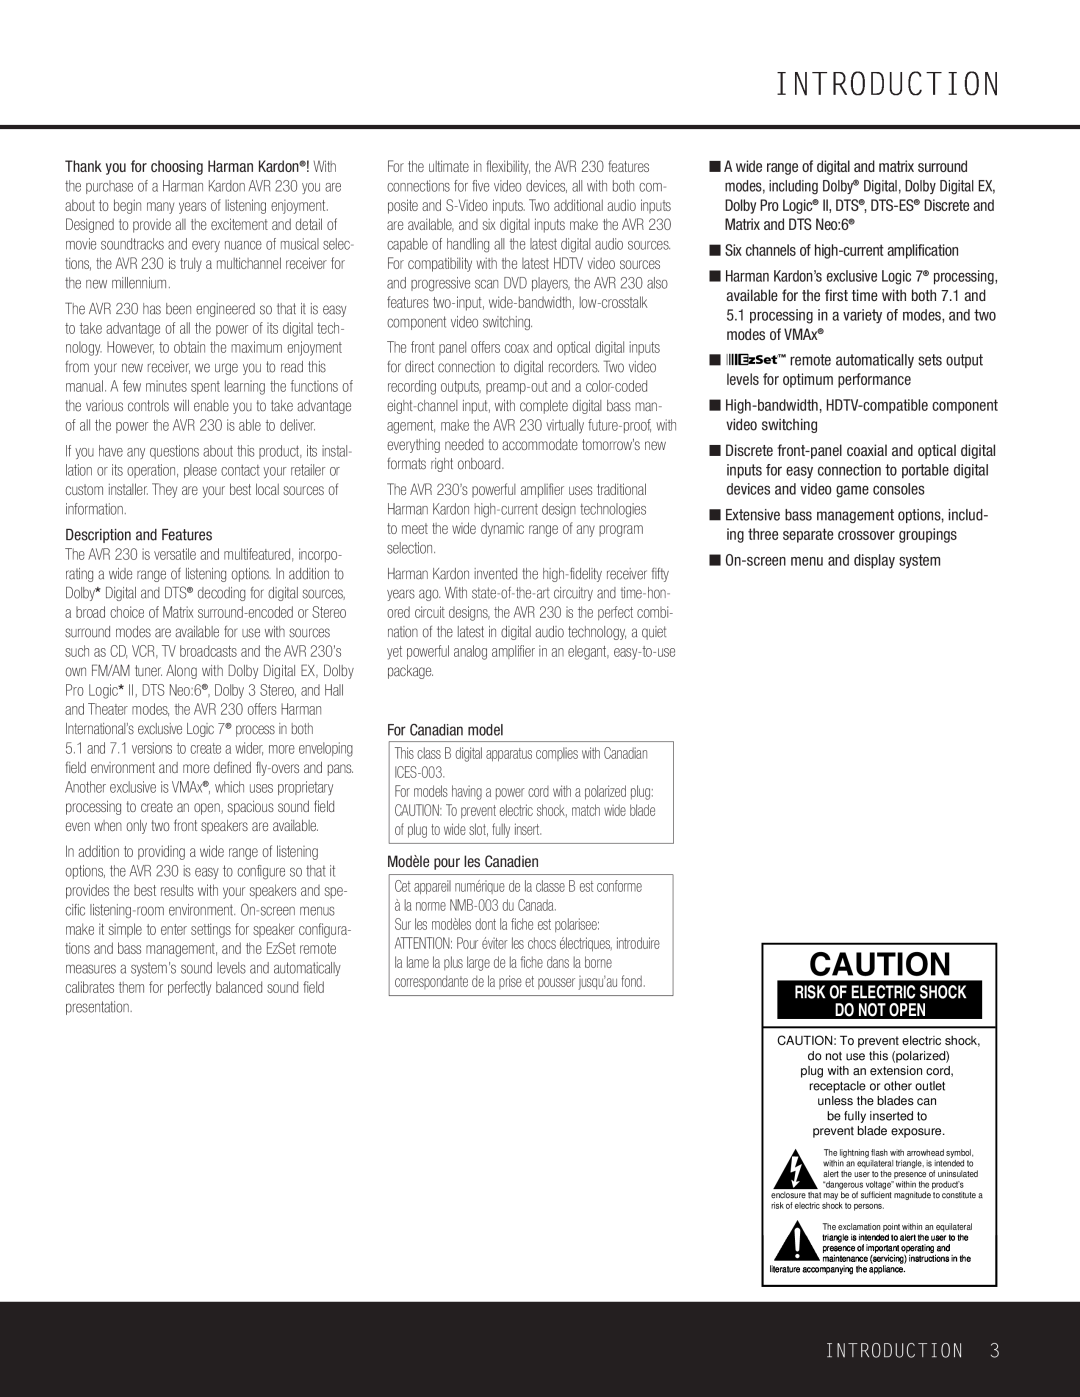 Harman-Kardon AVR 230 owner manual Introduction, Risk Of Electric Shock Do Not Open 